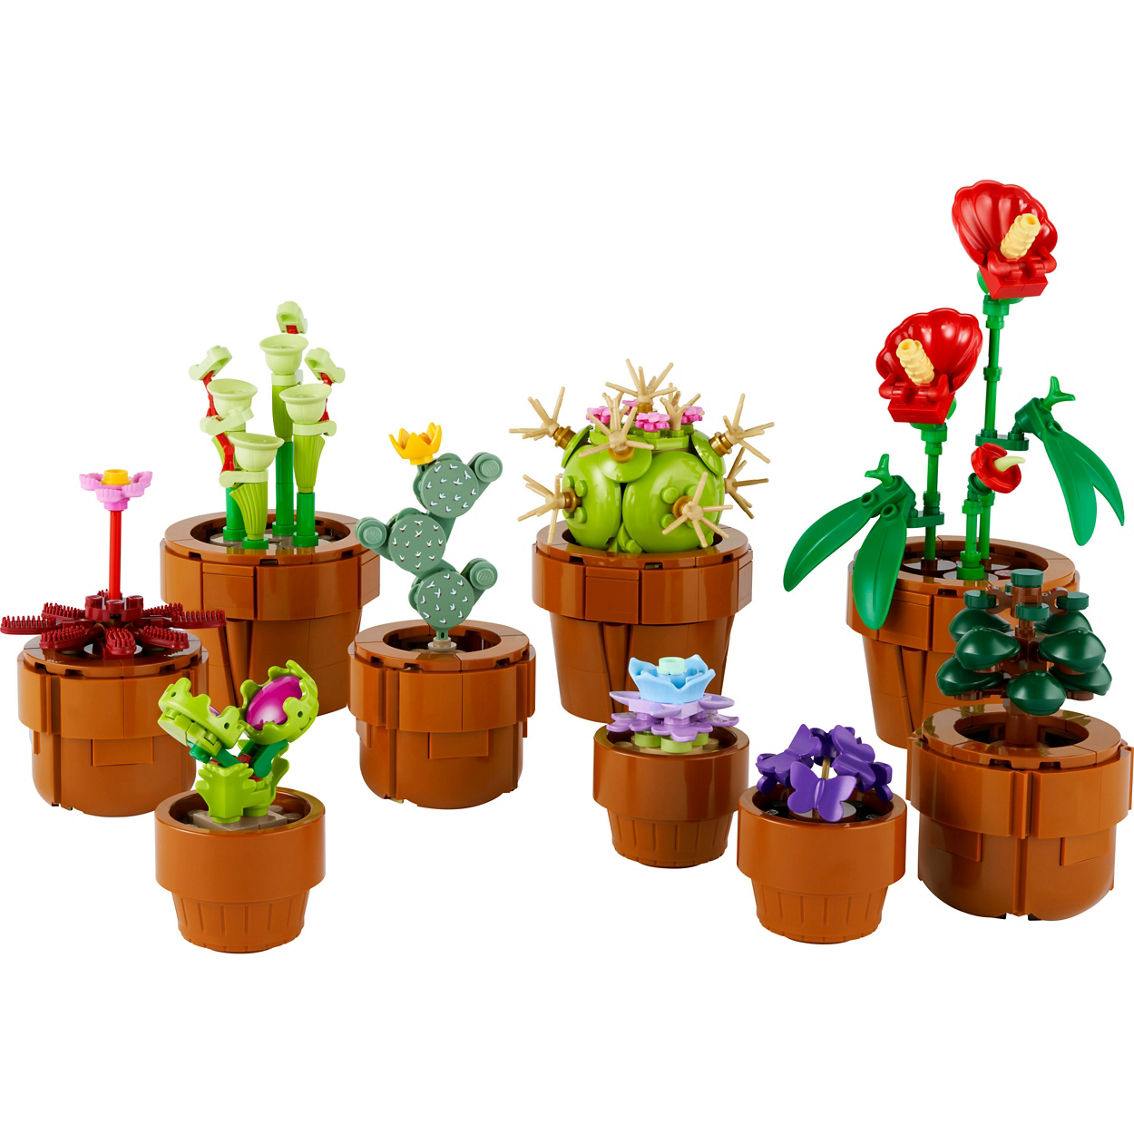 LEGO Icons Tiny Plants 10329 - Image 4 of 10